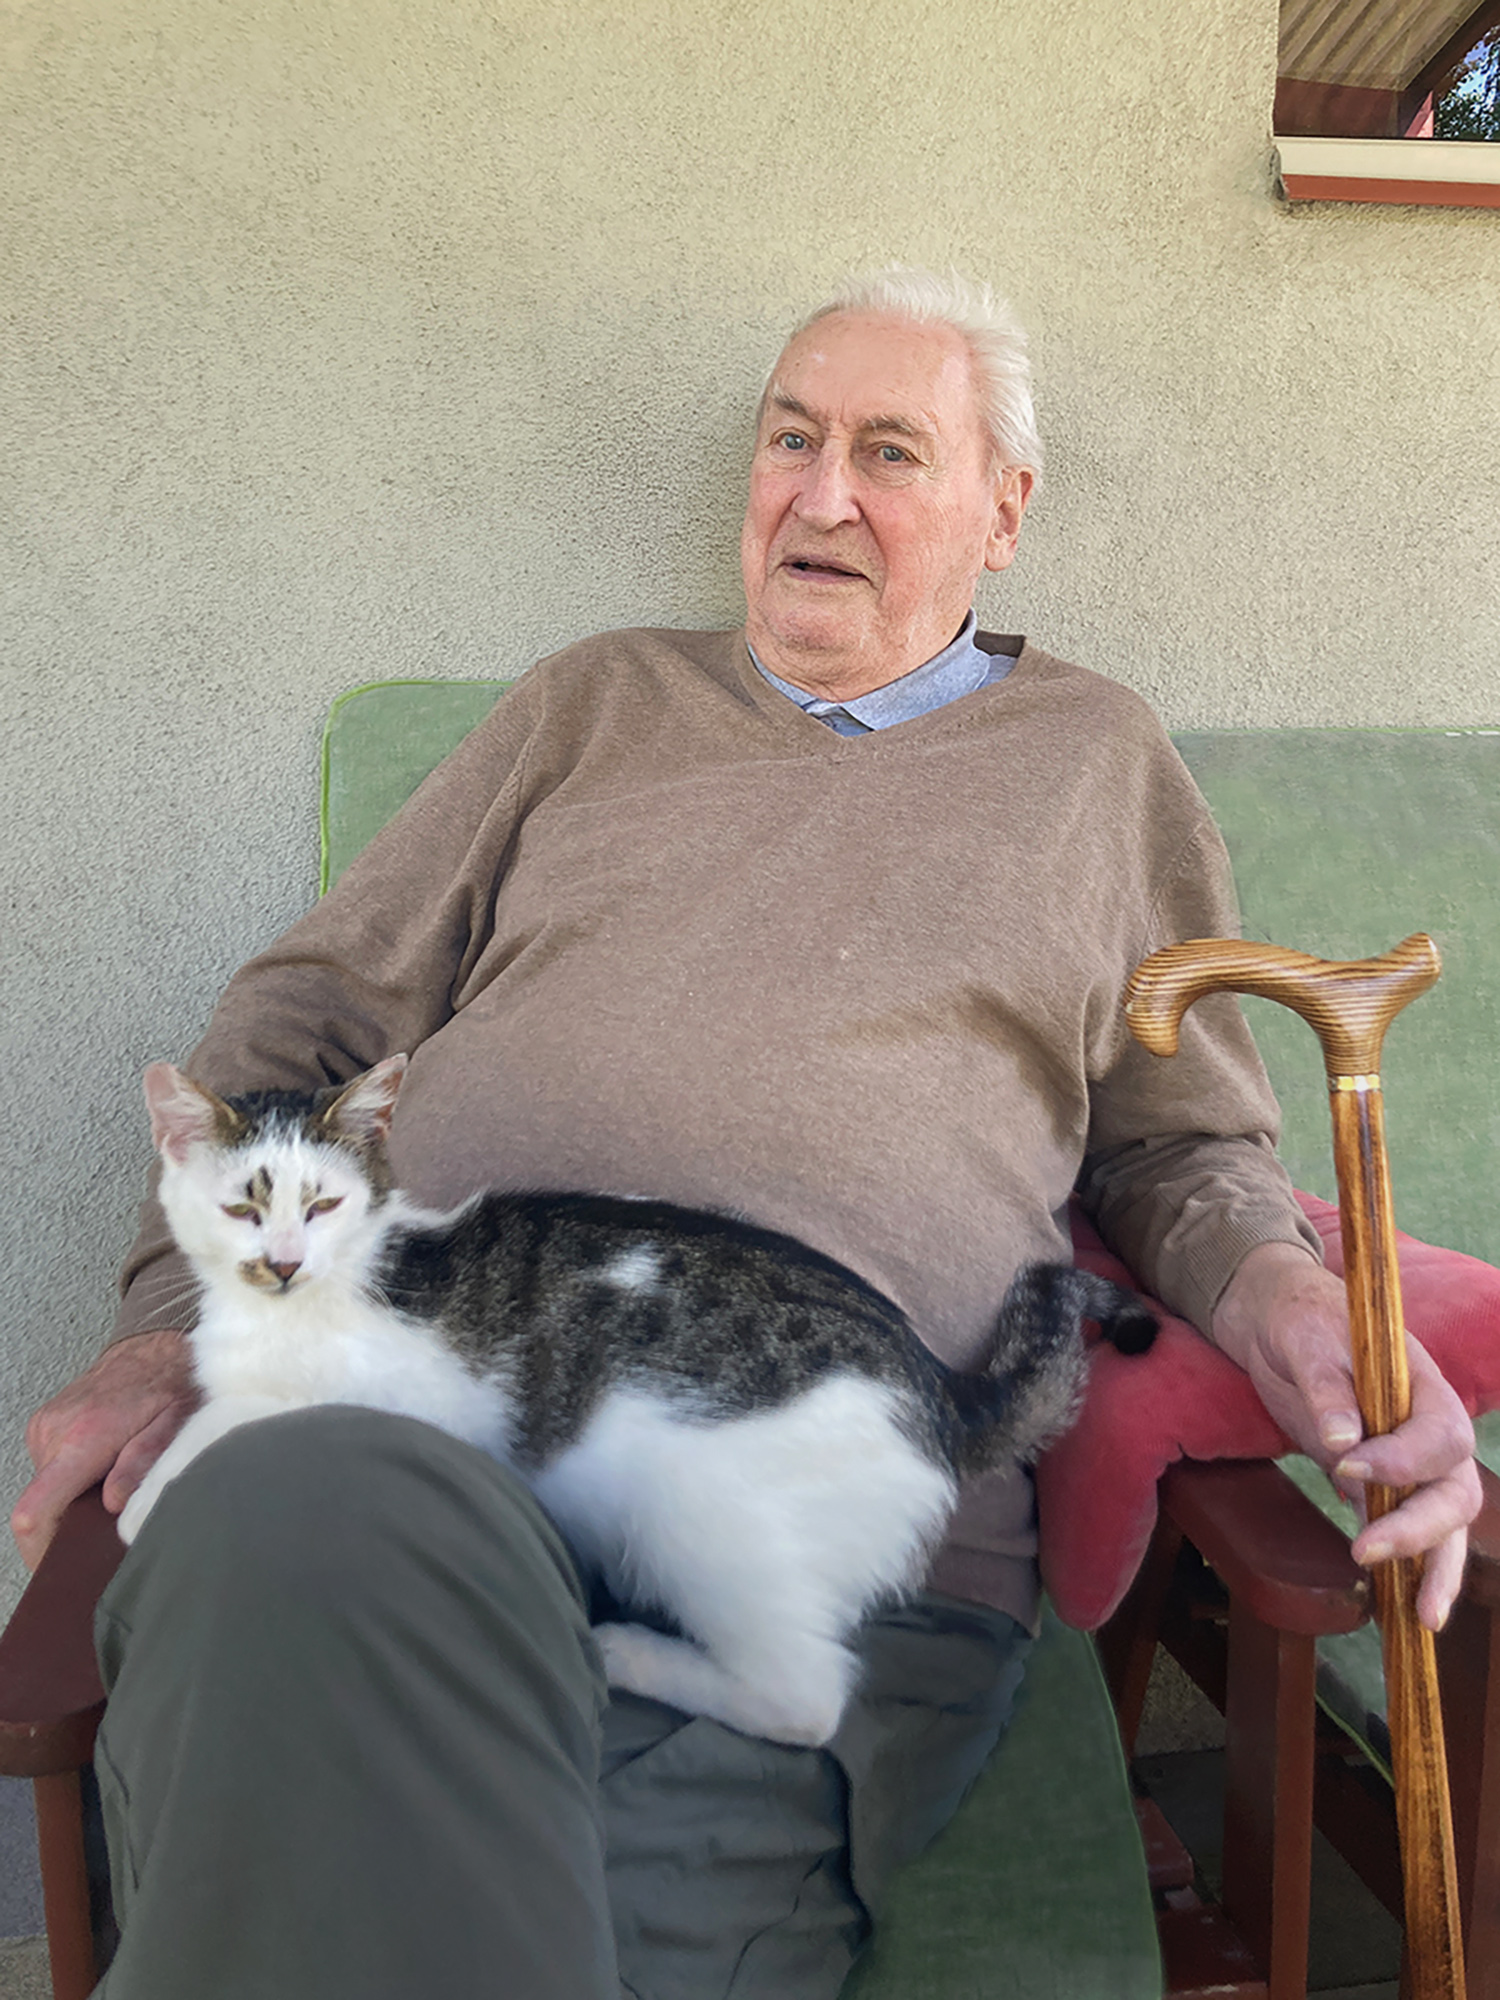 Děda s kočkou